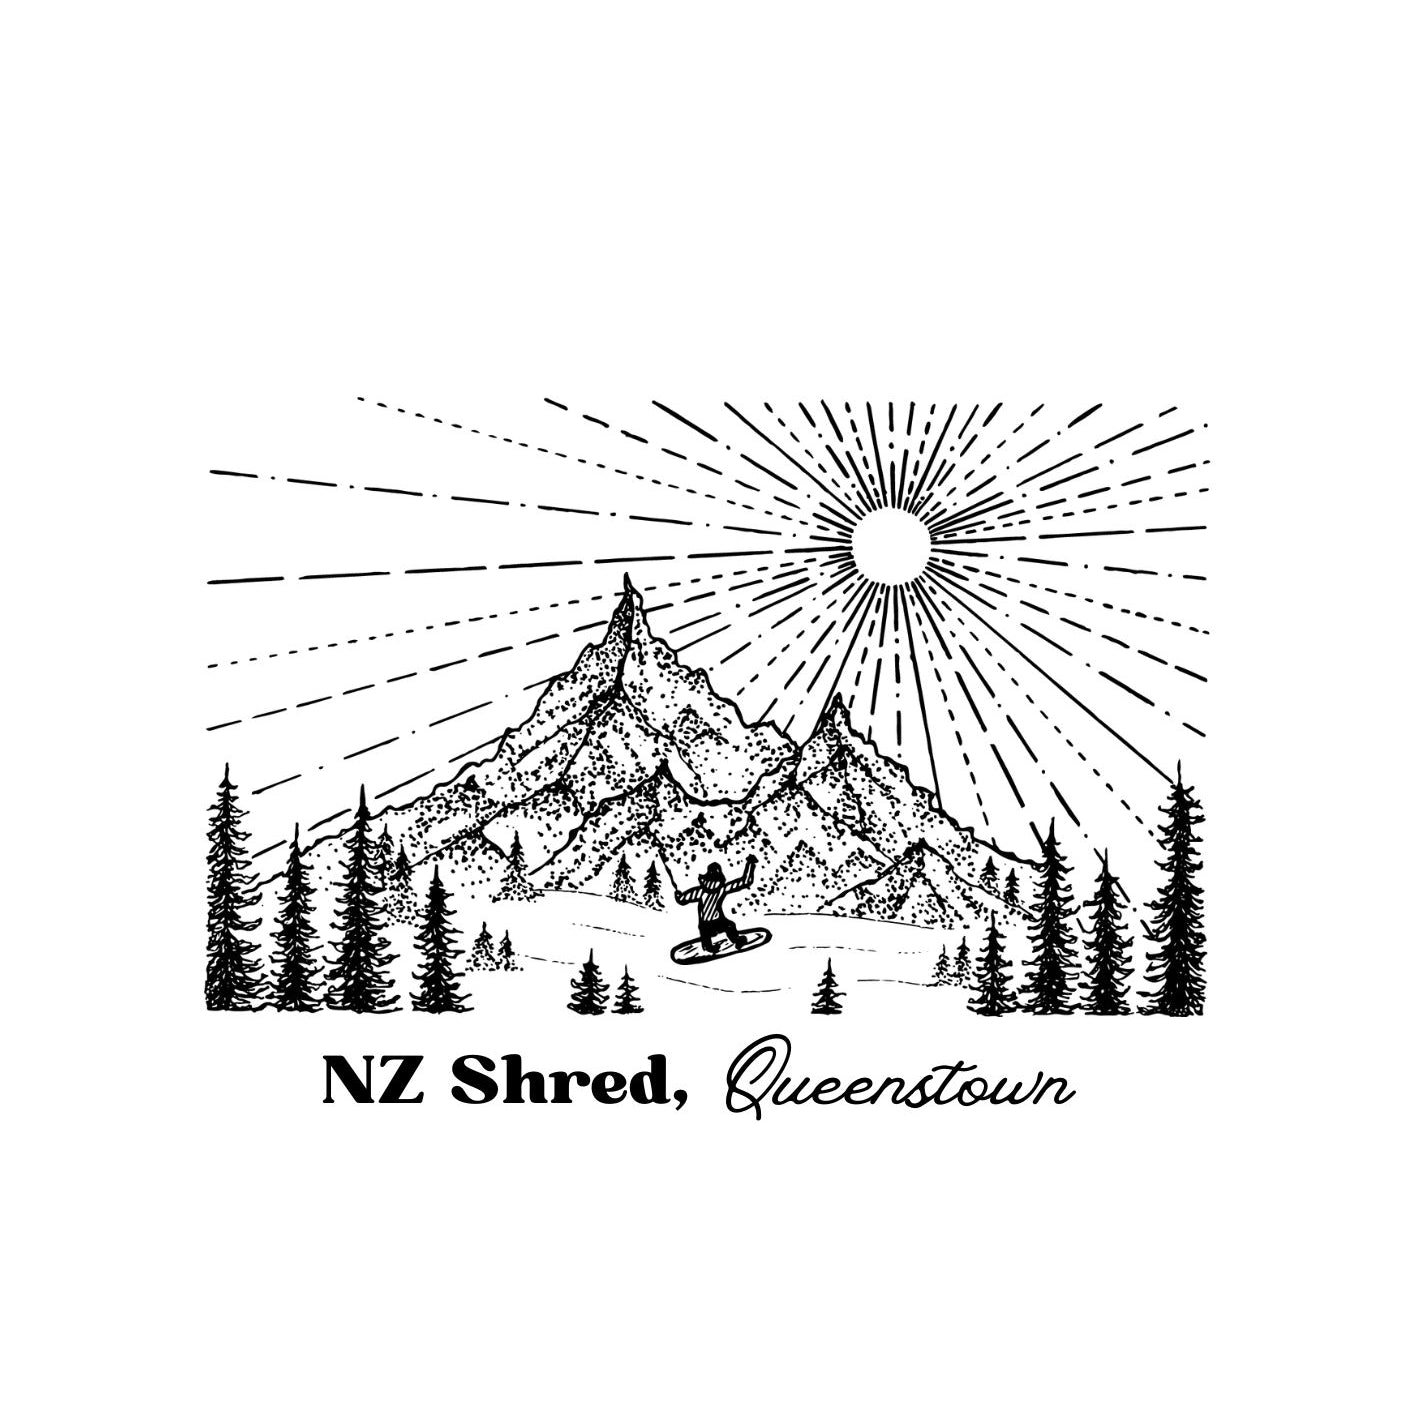 NZ Shred Queenstown Art Stickers